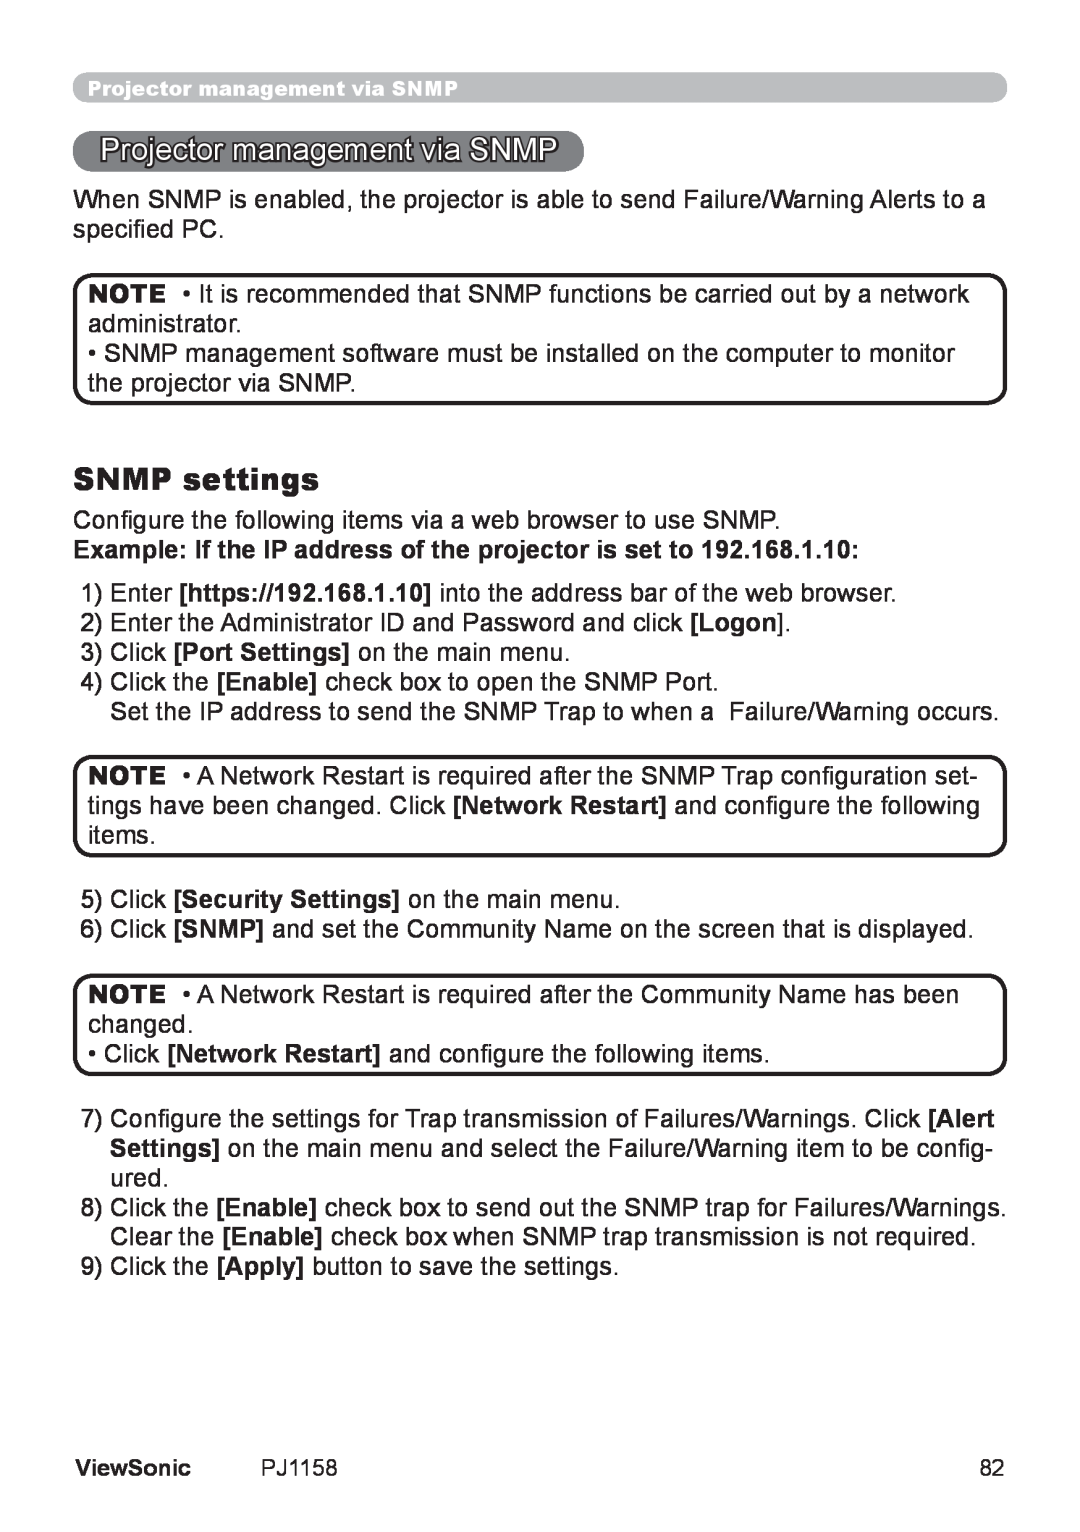 ViewSonic PJ1158 manual Projector management via SNMP, SNMP settings 